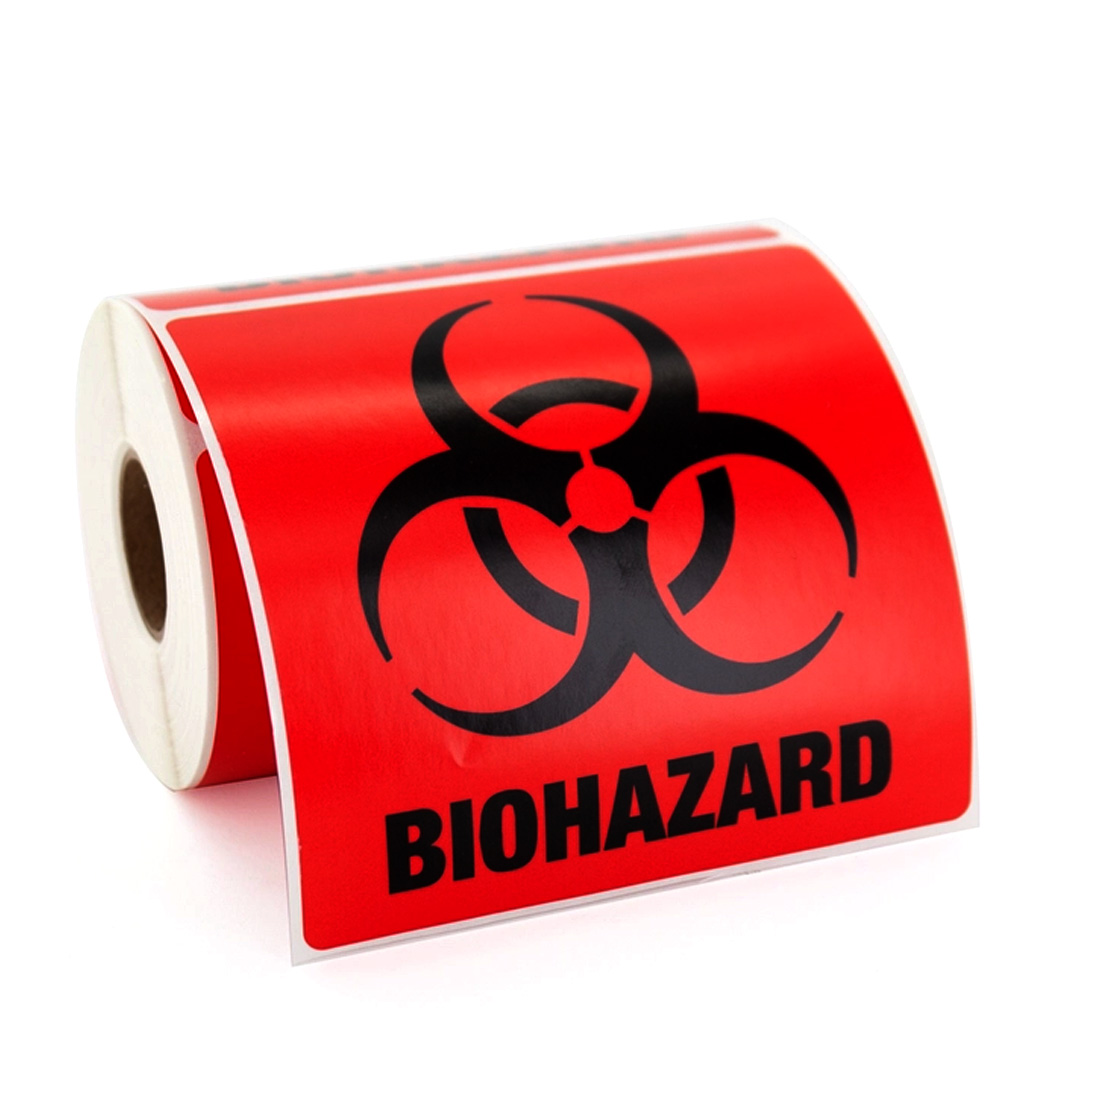 Biohazard Labels, Fluorescent Red, Sticker Style - 500/Roll